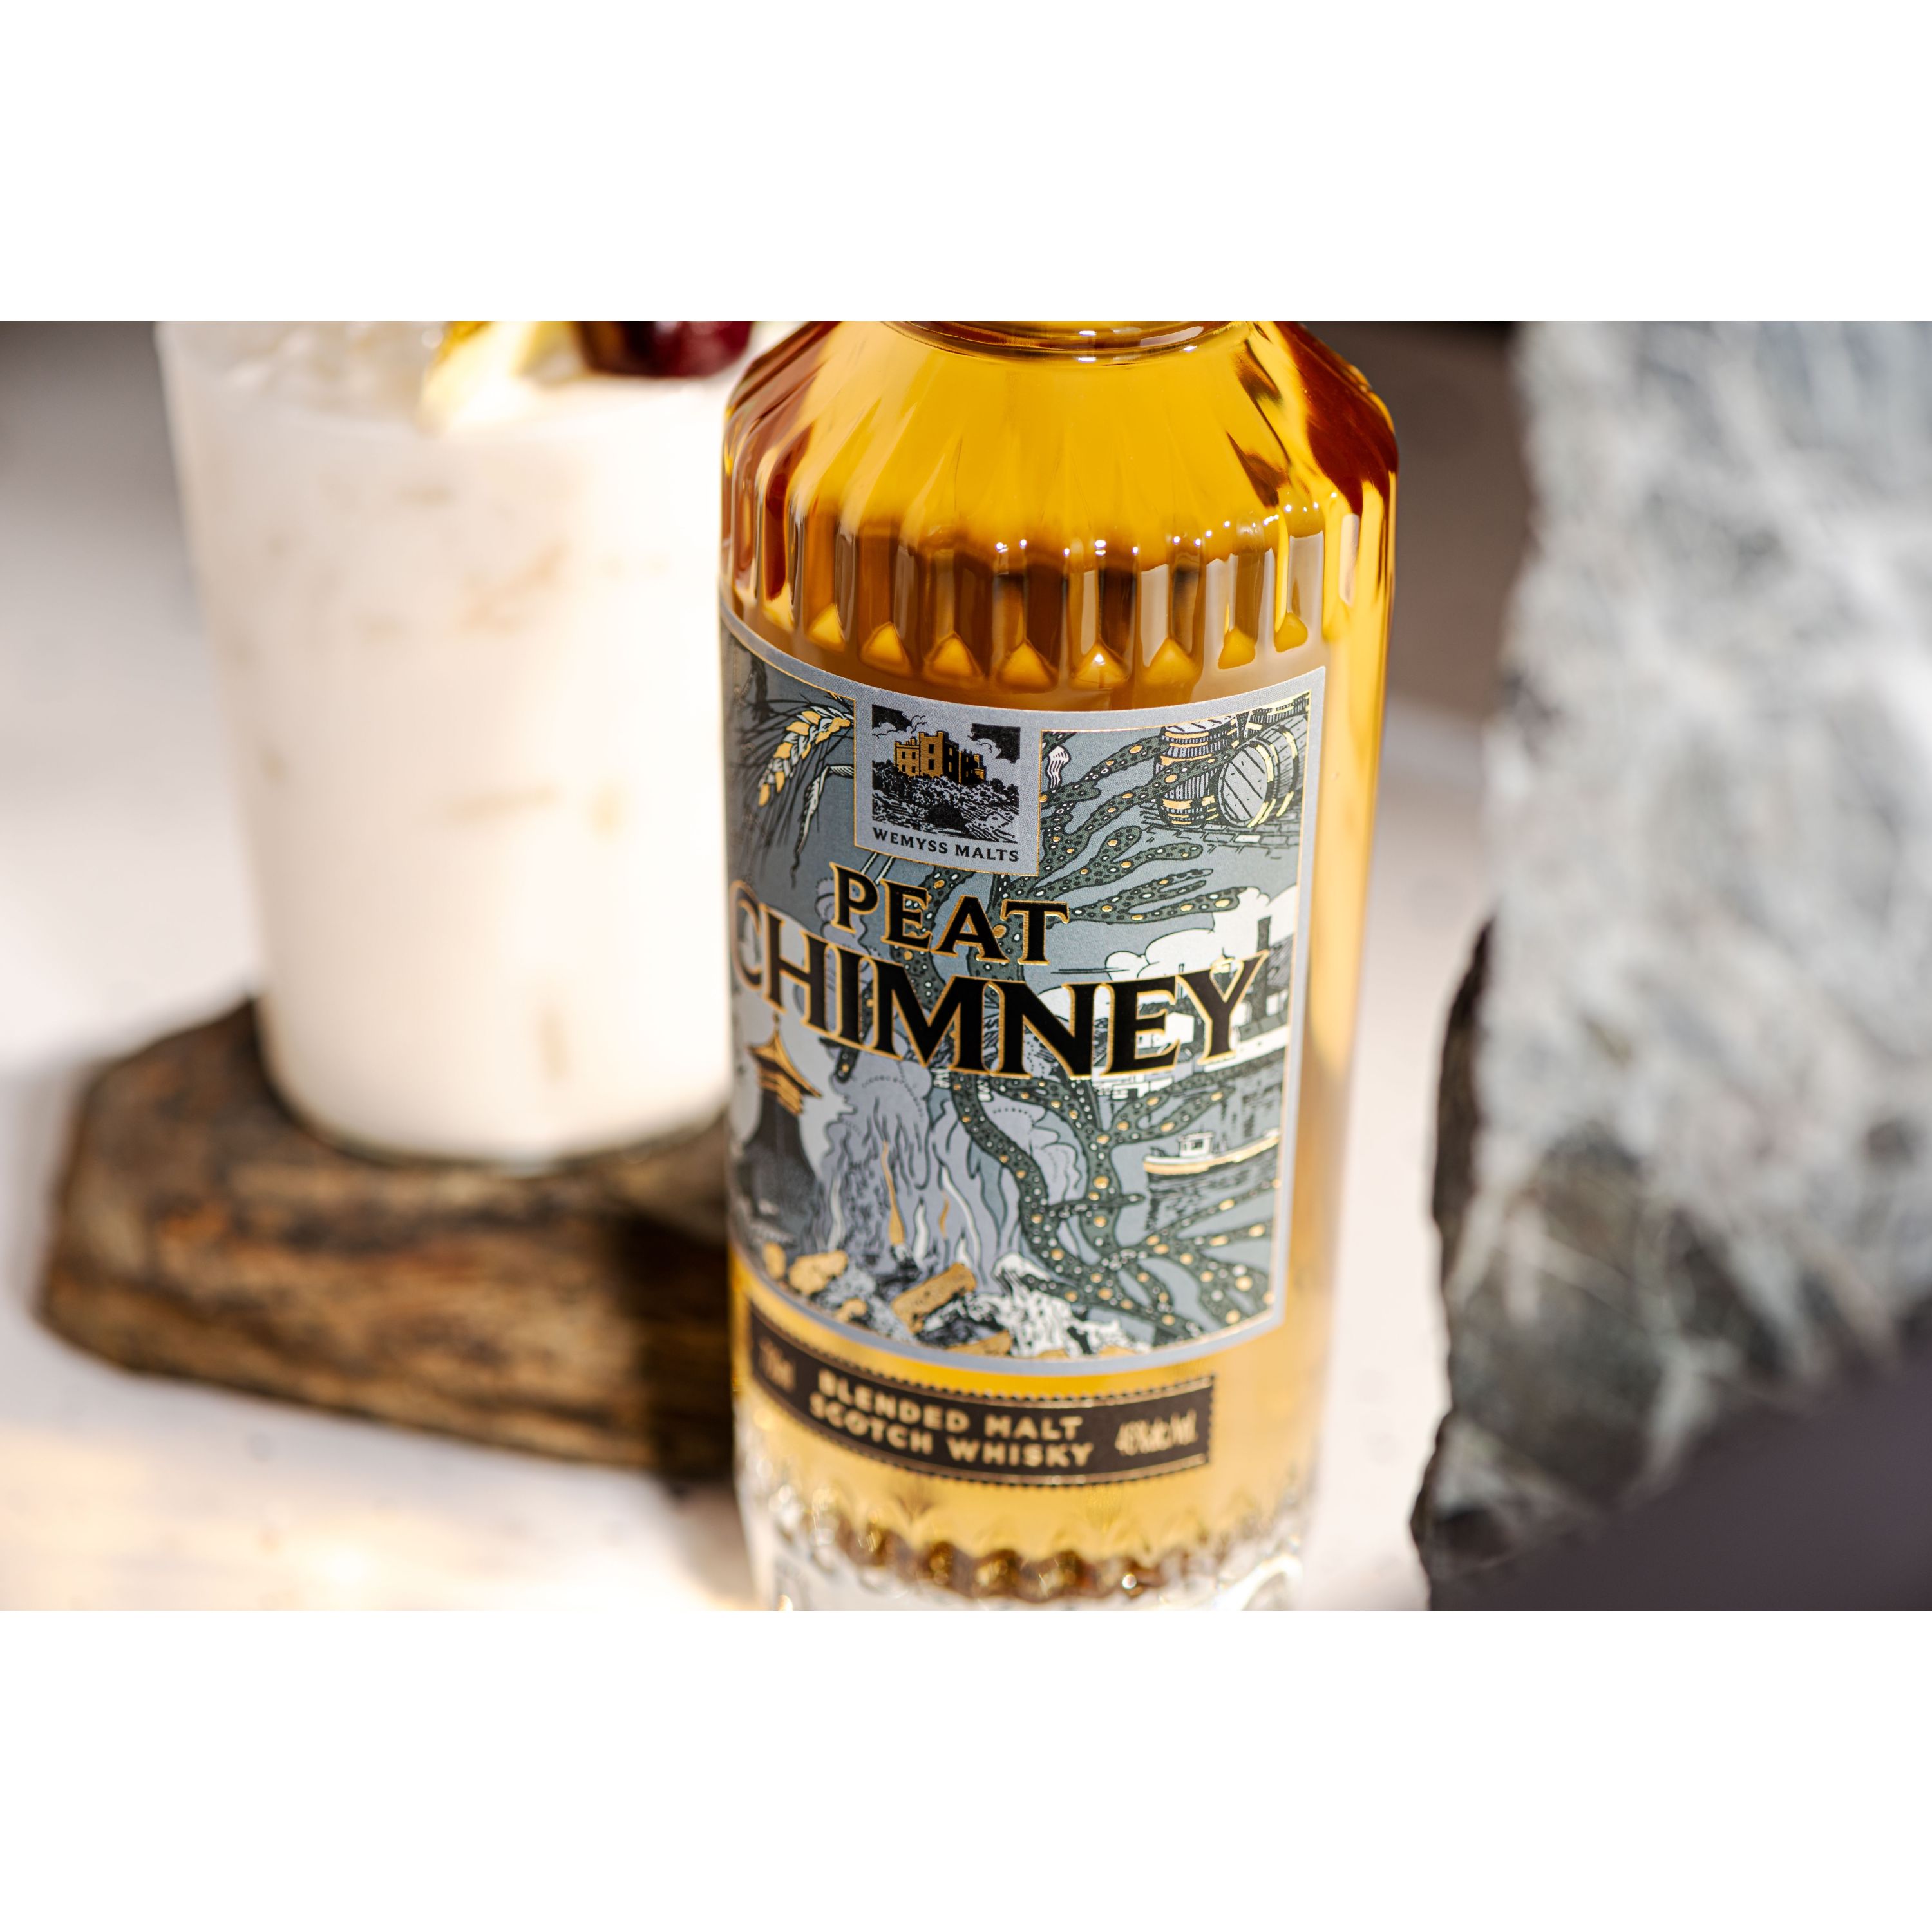 Виски Wemyss Malts Peat Chimney Blended Malt 46% 0.7 л в подарочной упаковке - фото 3